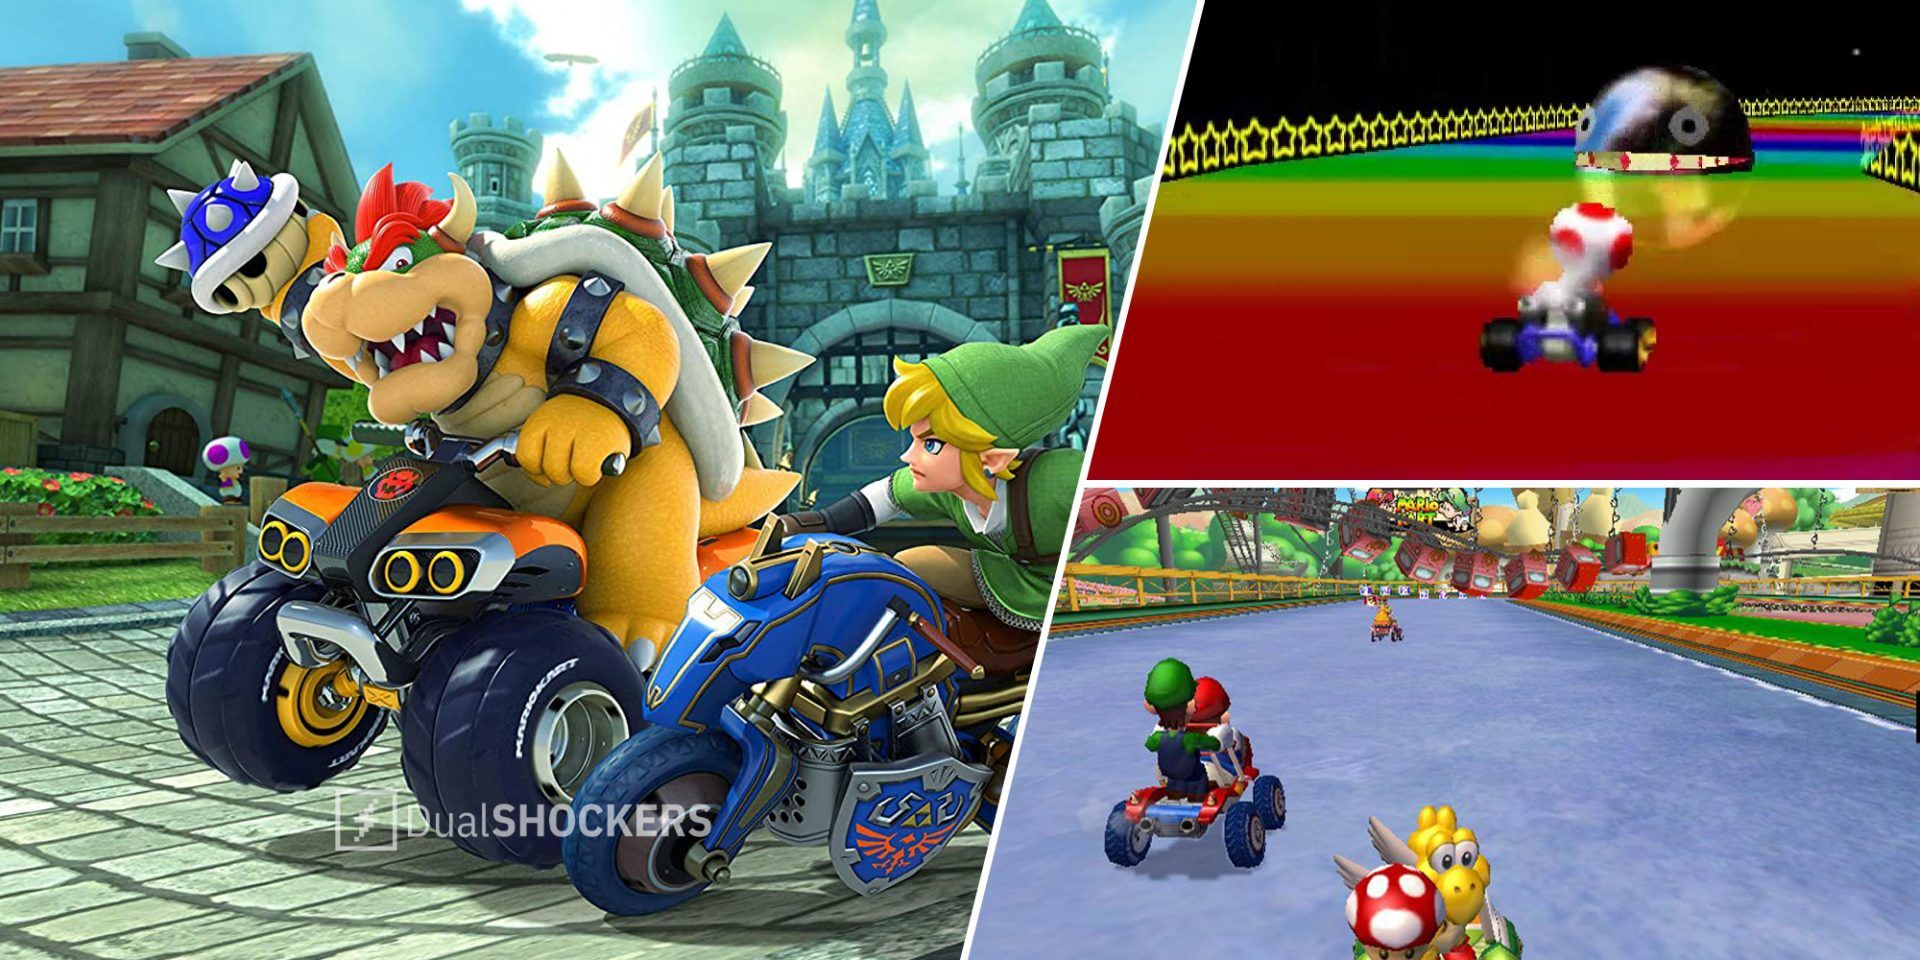 Hyrule Circuit - Mario Kart 8 Deluxe on left, Rainbow Road - Mario Kart 64 on top right, Baby Park - Mario Kart Double Dash on bottom right